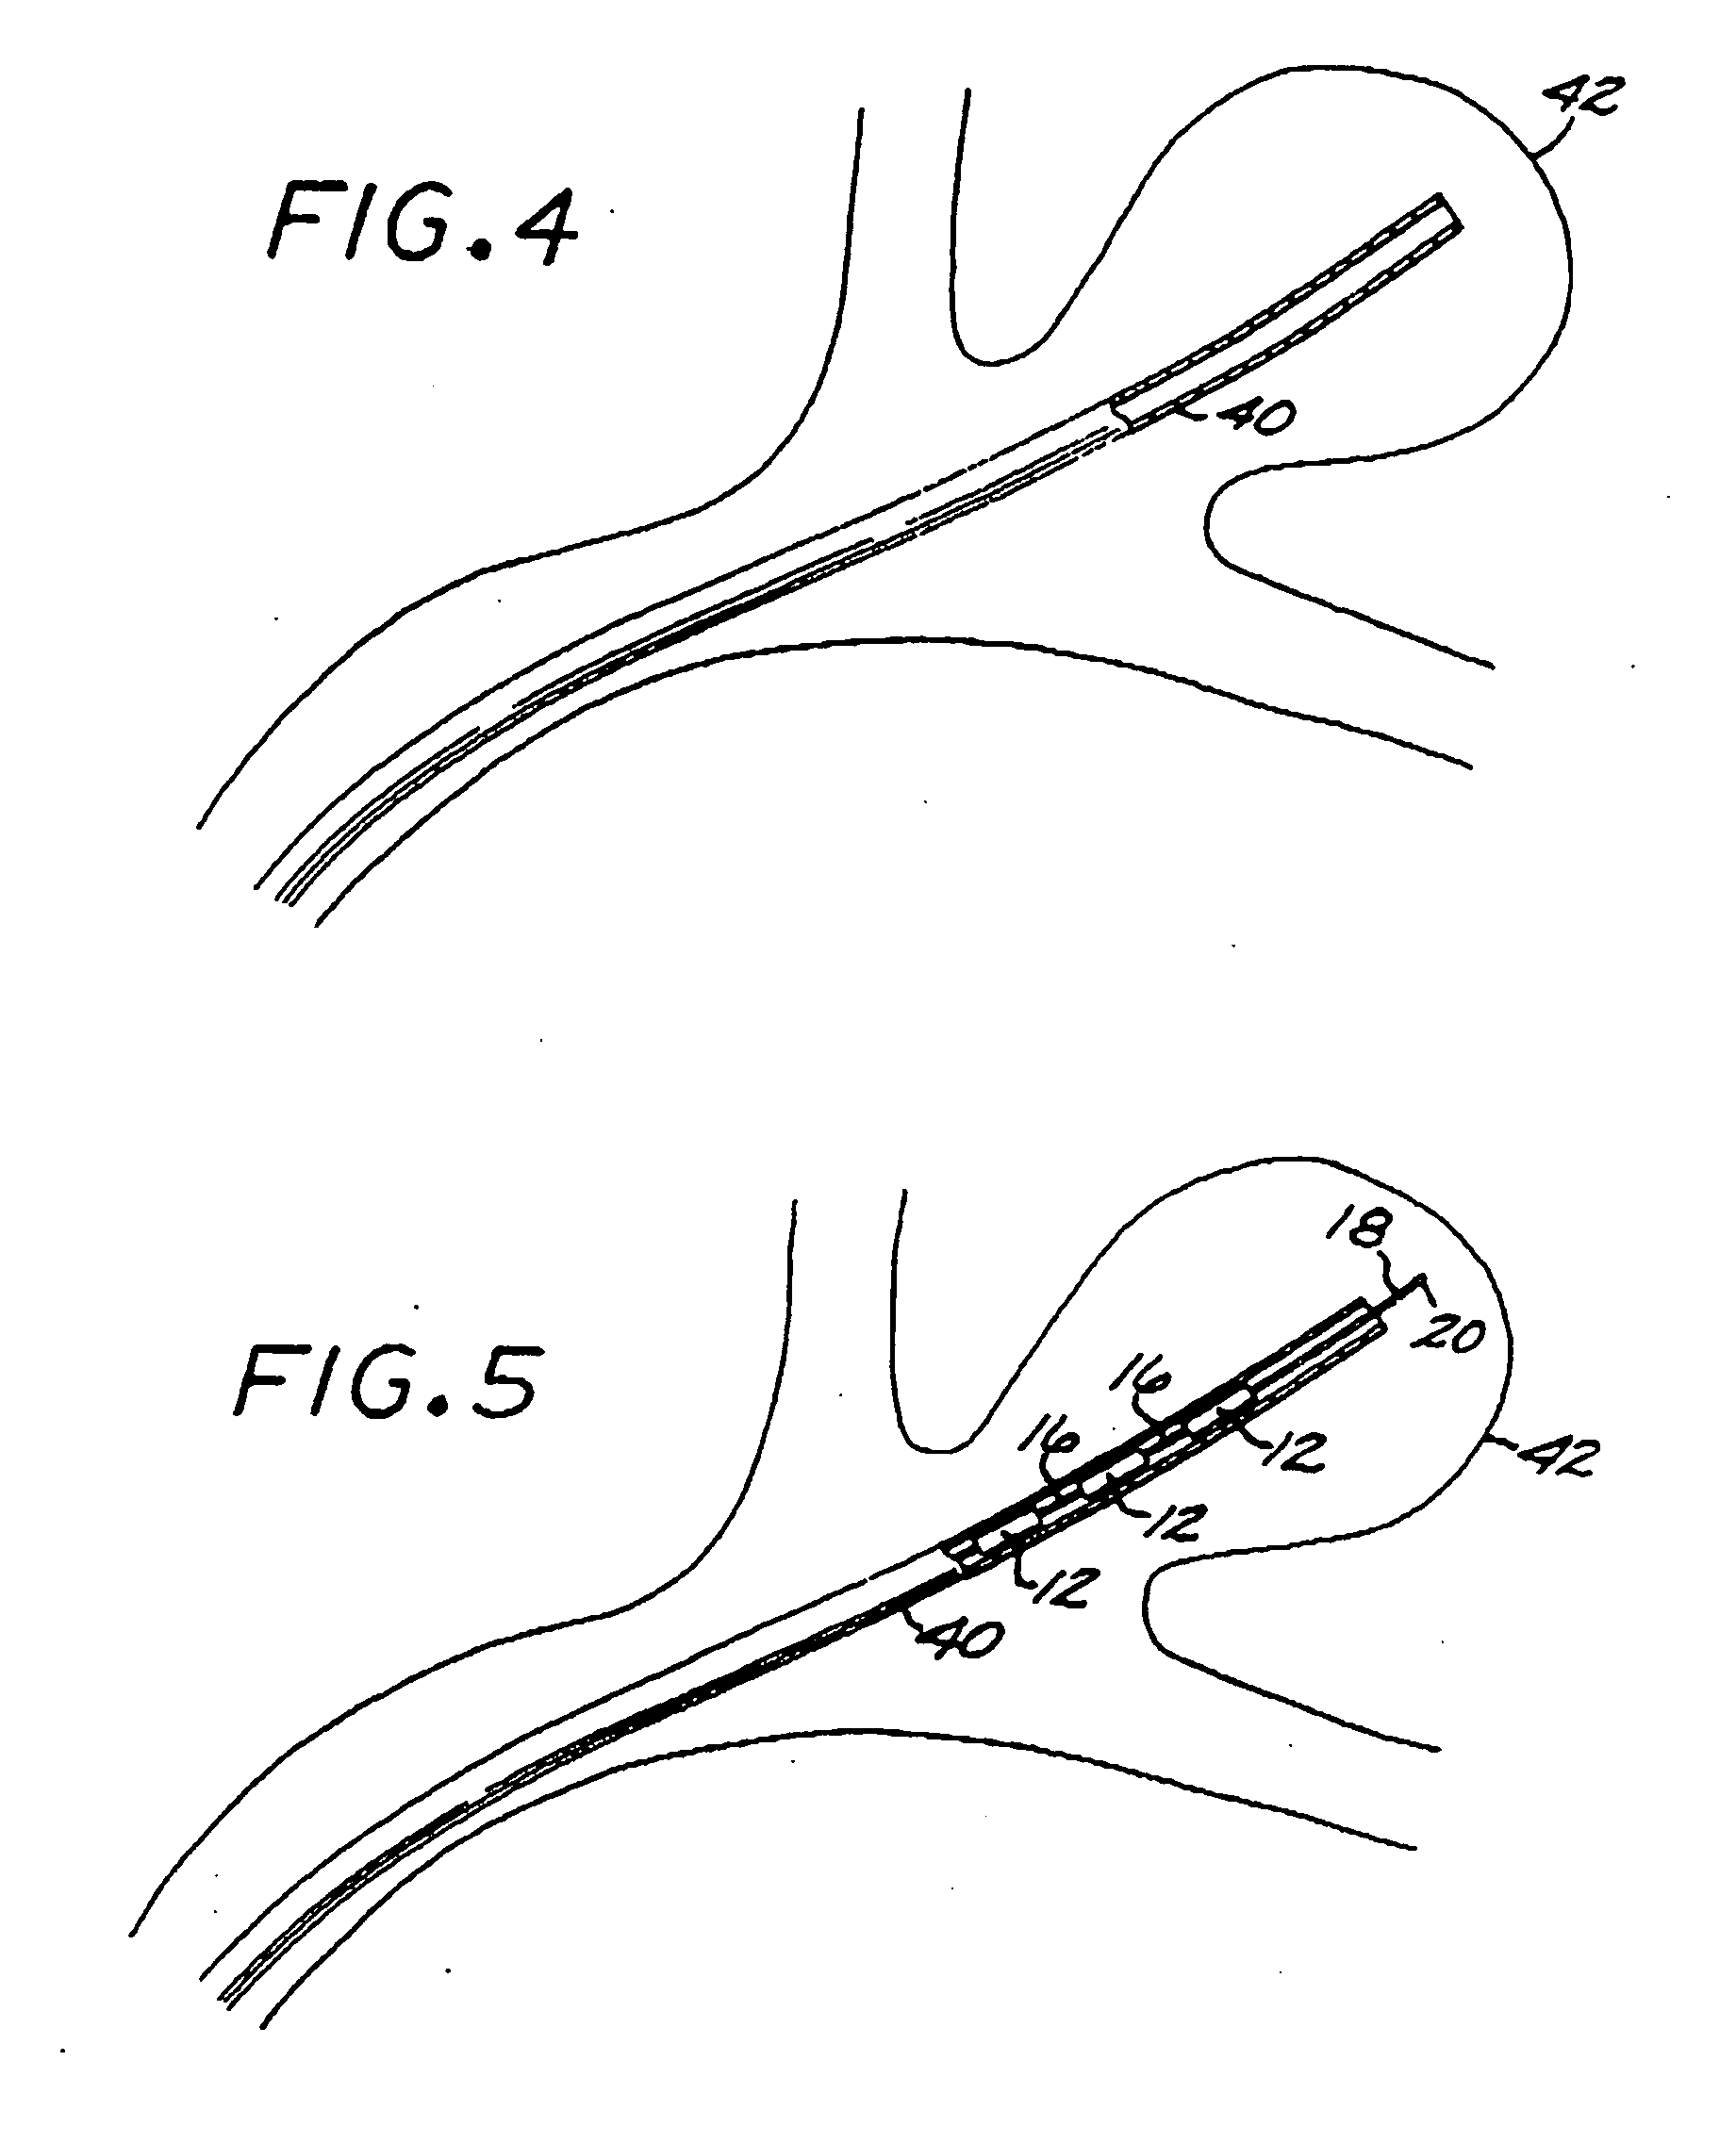 Method of manufacturing expansile filamentous embolization devices